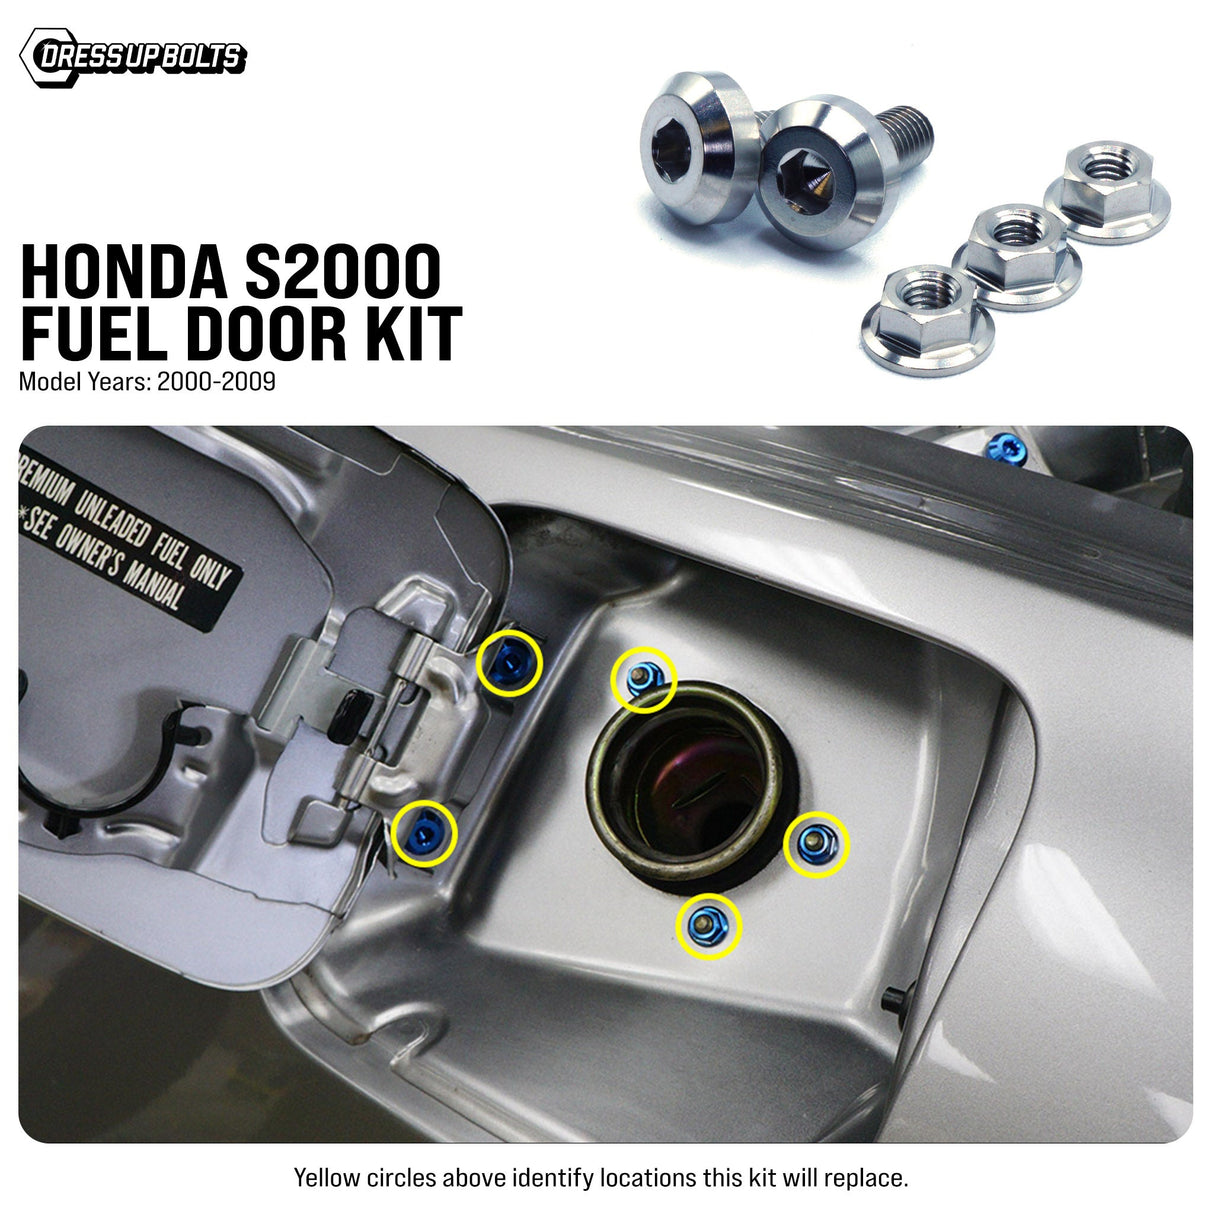 Dress Up Bolts Titanium Hardware Fuel Door Kit - Honda S2000 (2000-2009)